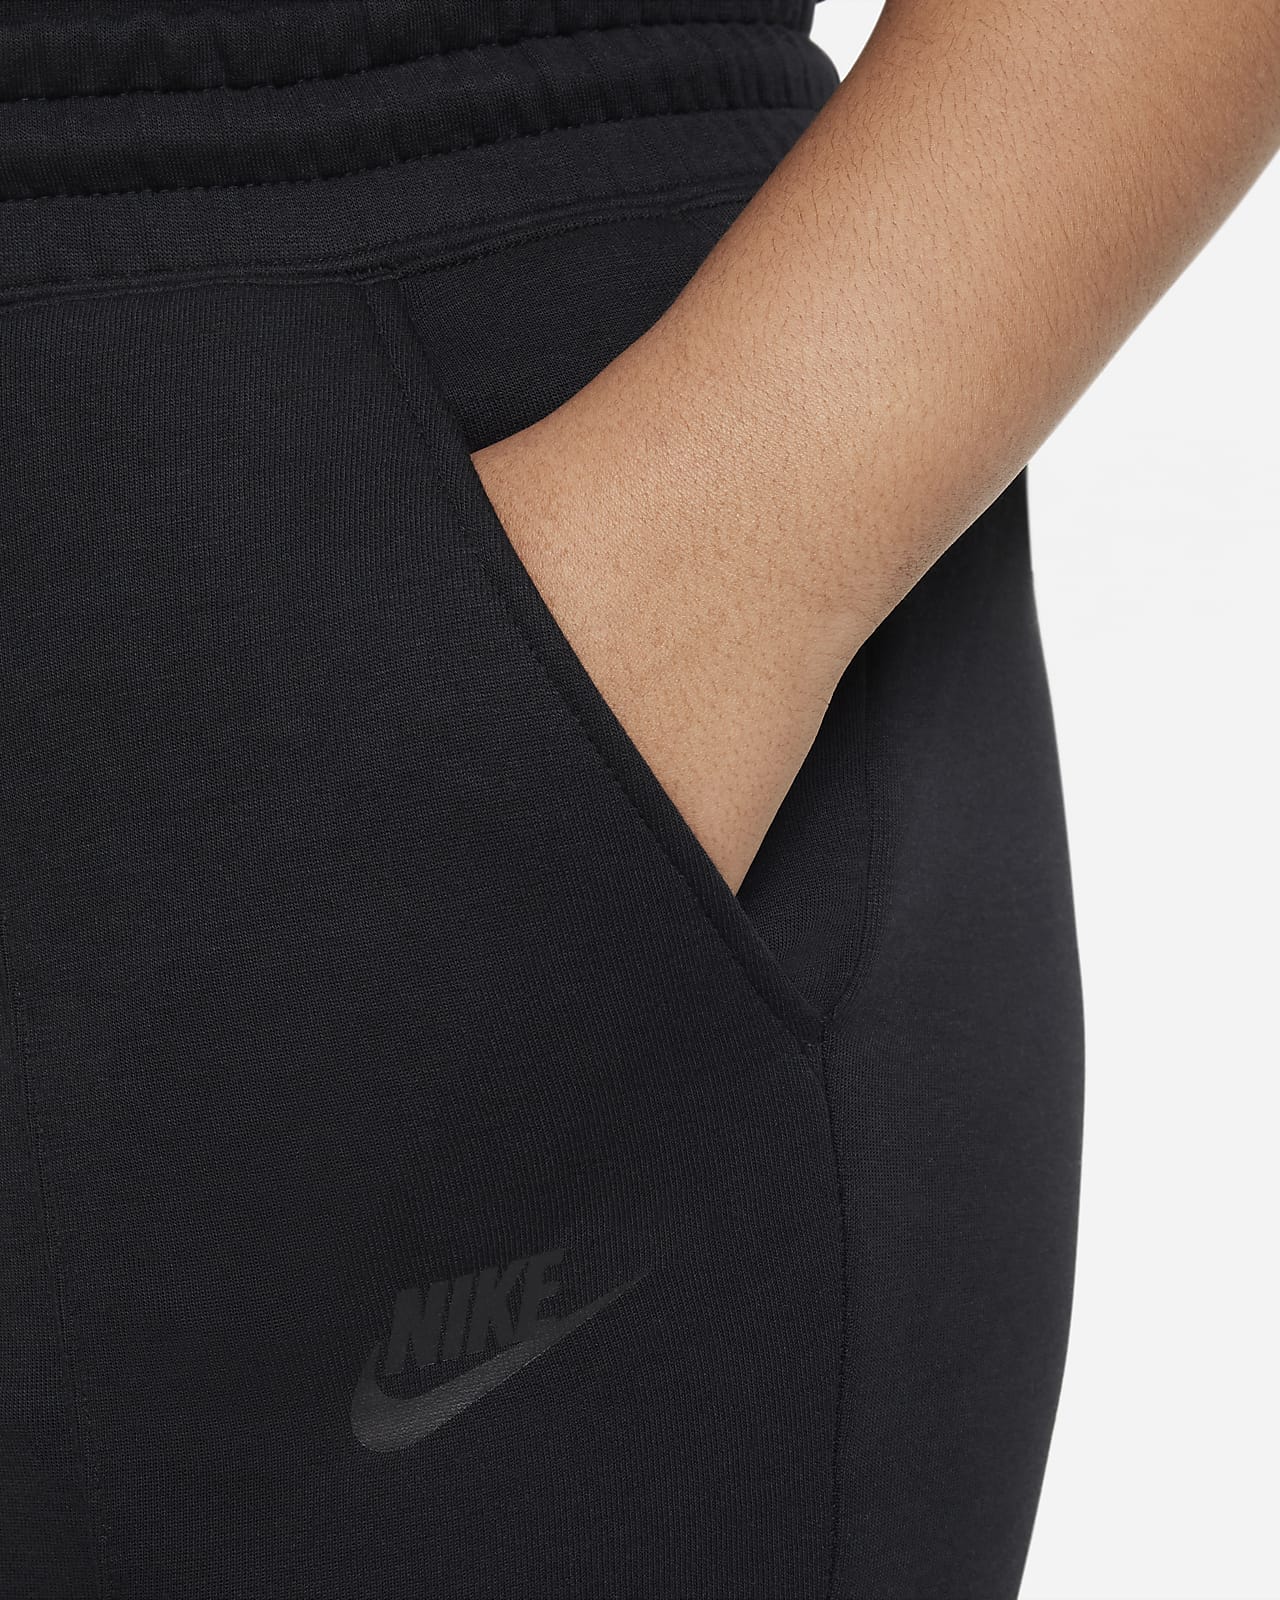 NEW Nike Sportswear Tech Fleece Jogger Pants Girls Pink CZ2595 664 - SIZE M